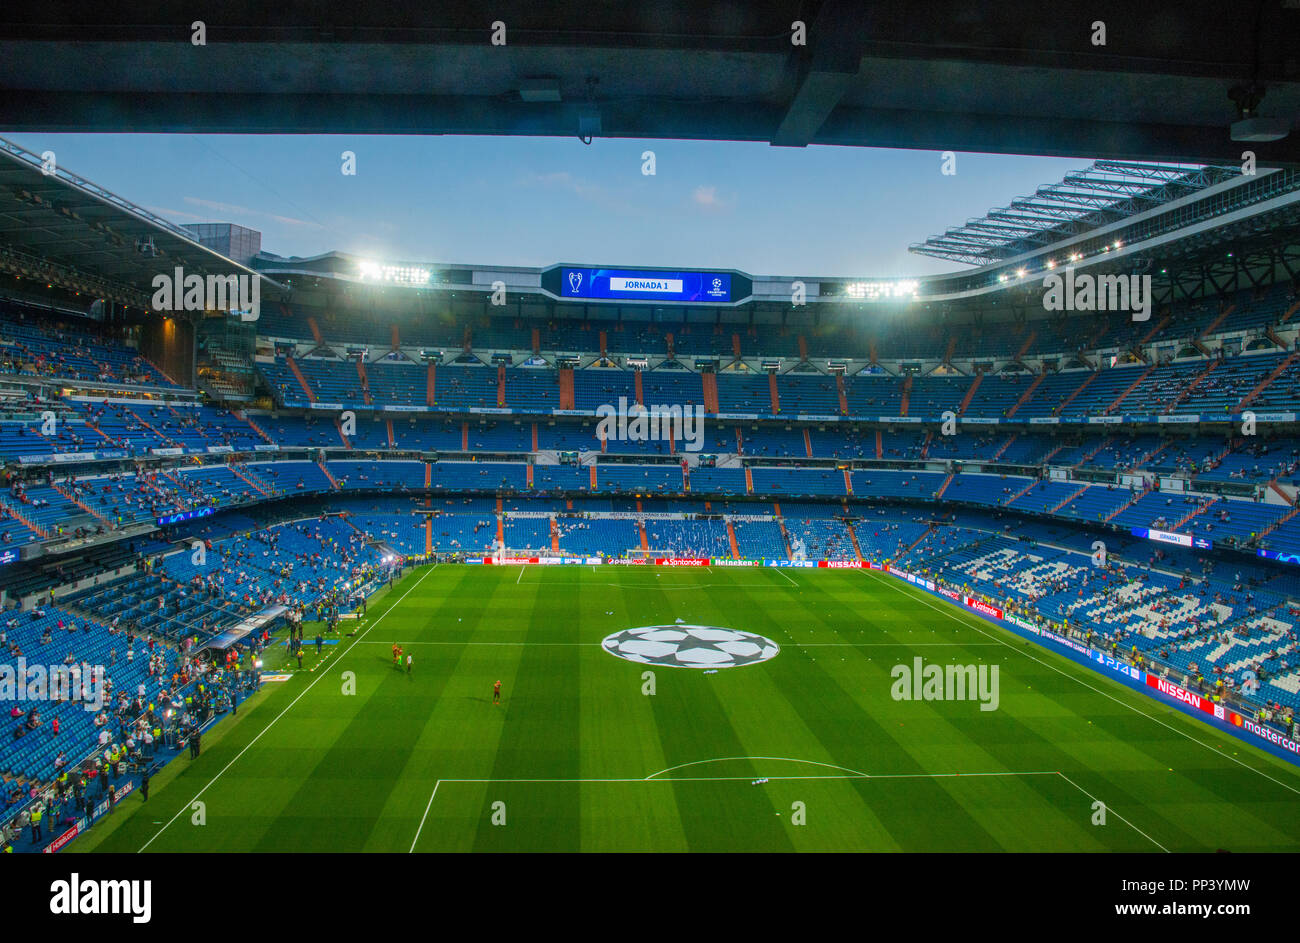 Panoramic Santiago Bernabeu Football Stadium At Night Stock Photo -  Download Image Now - iStock